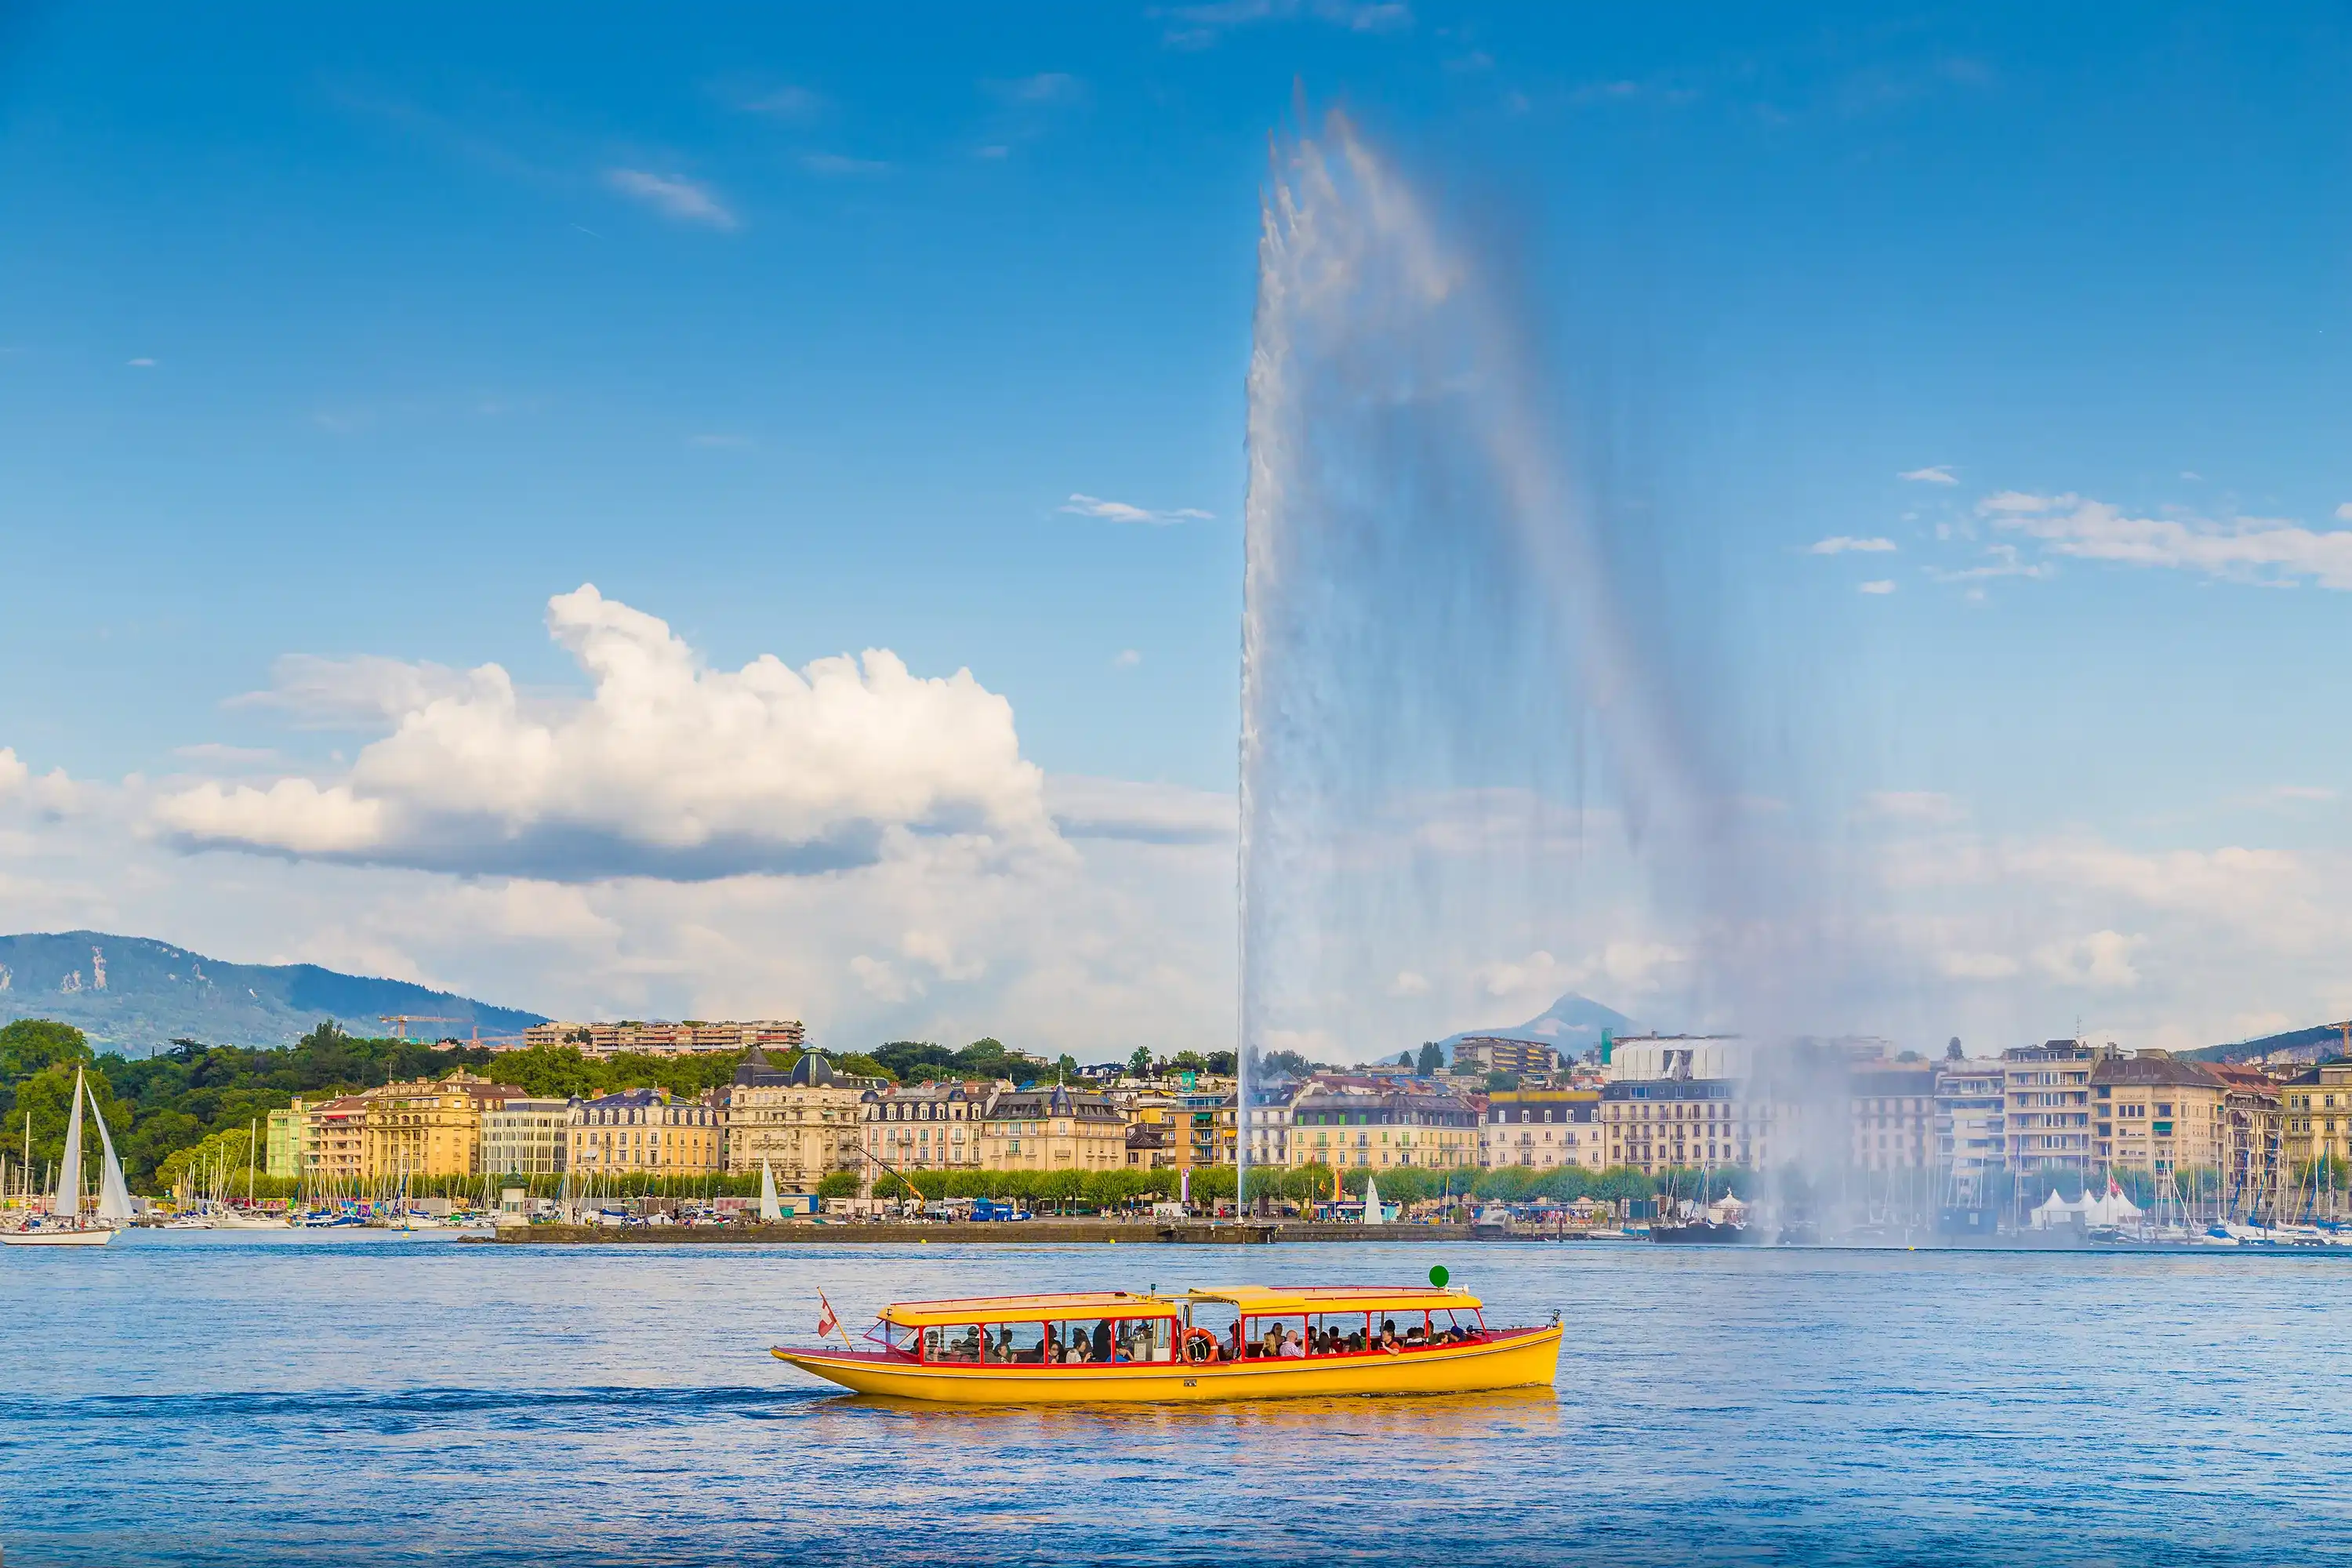 Geneva hotels. Best hotels in Geneva, Switzerland